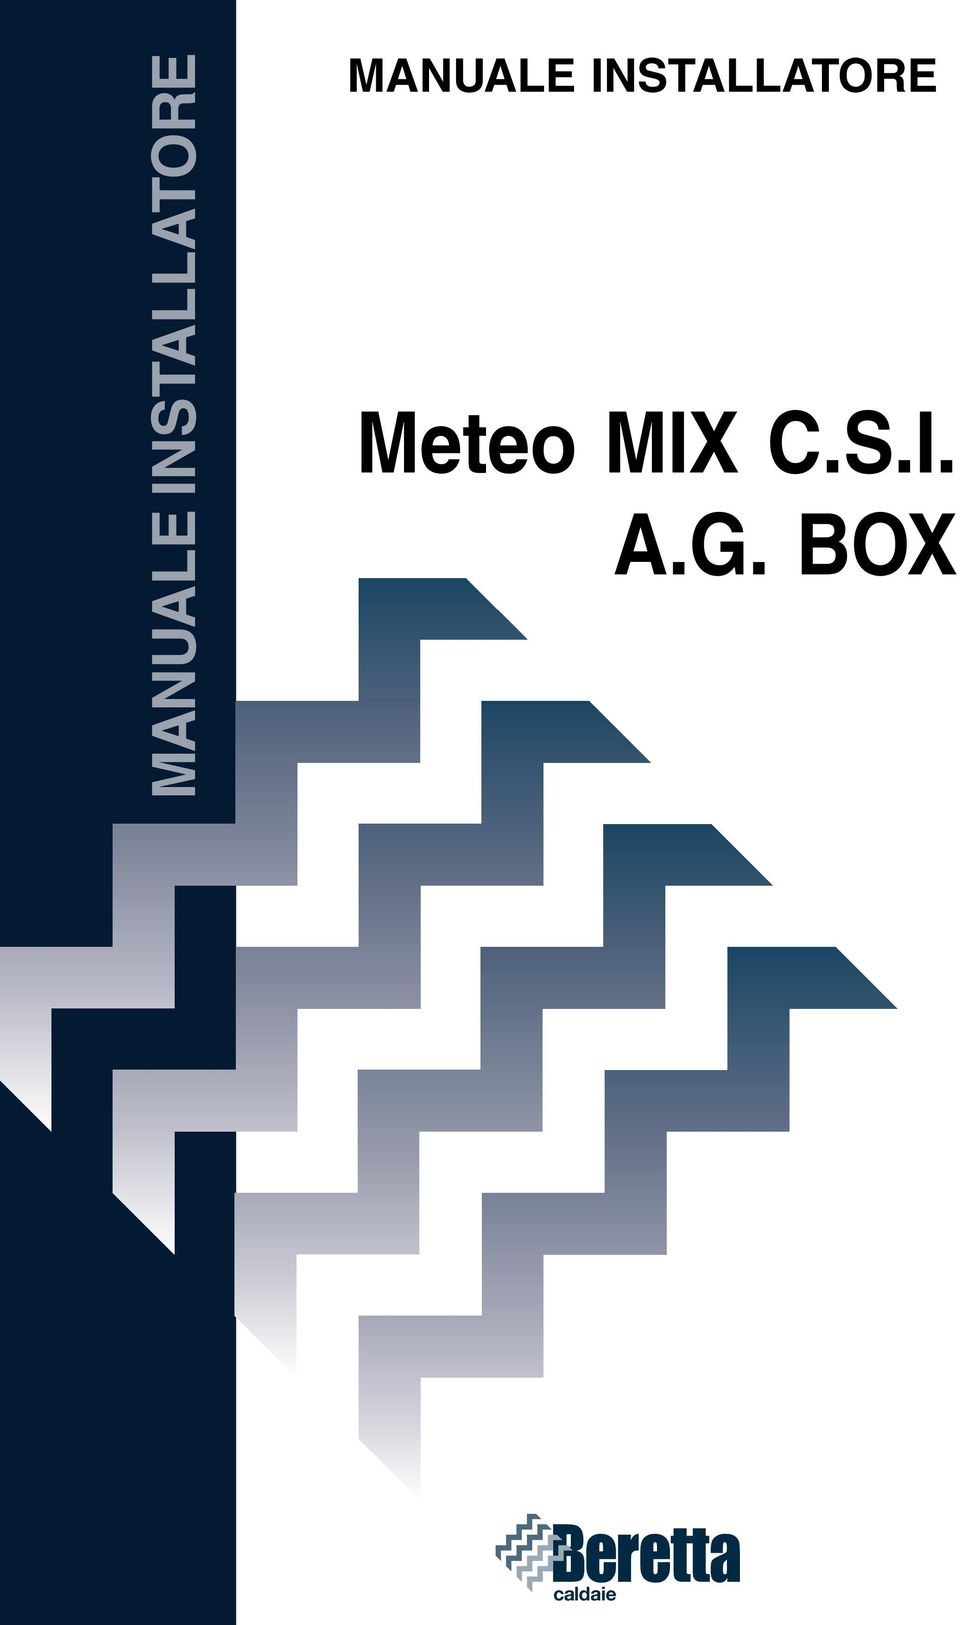 Meteo MIX C.S.I. A.